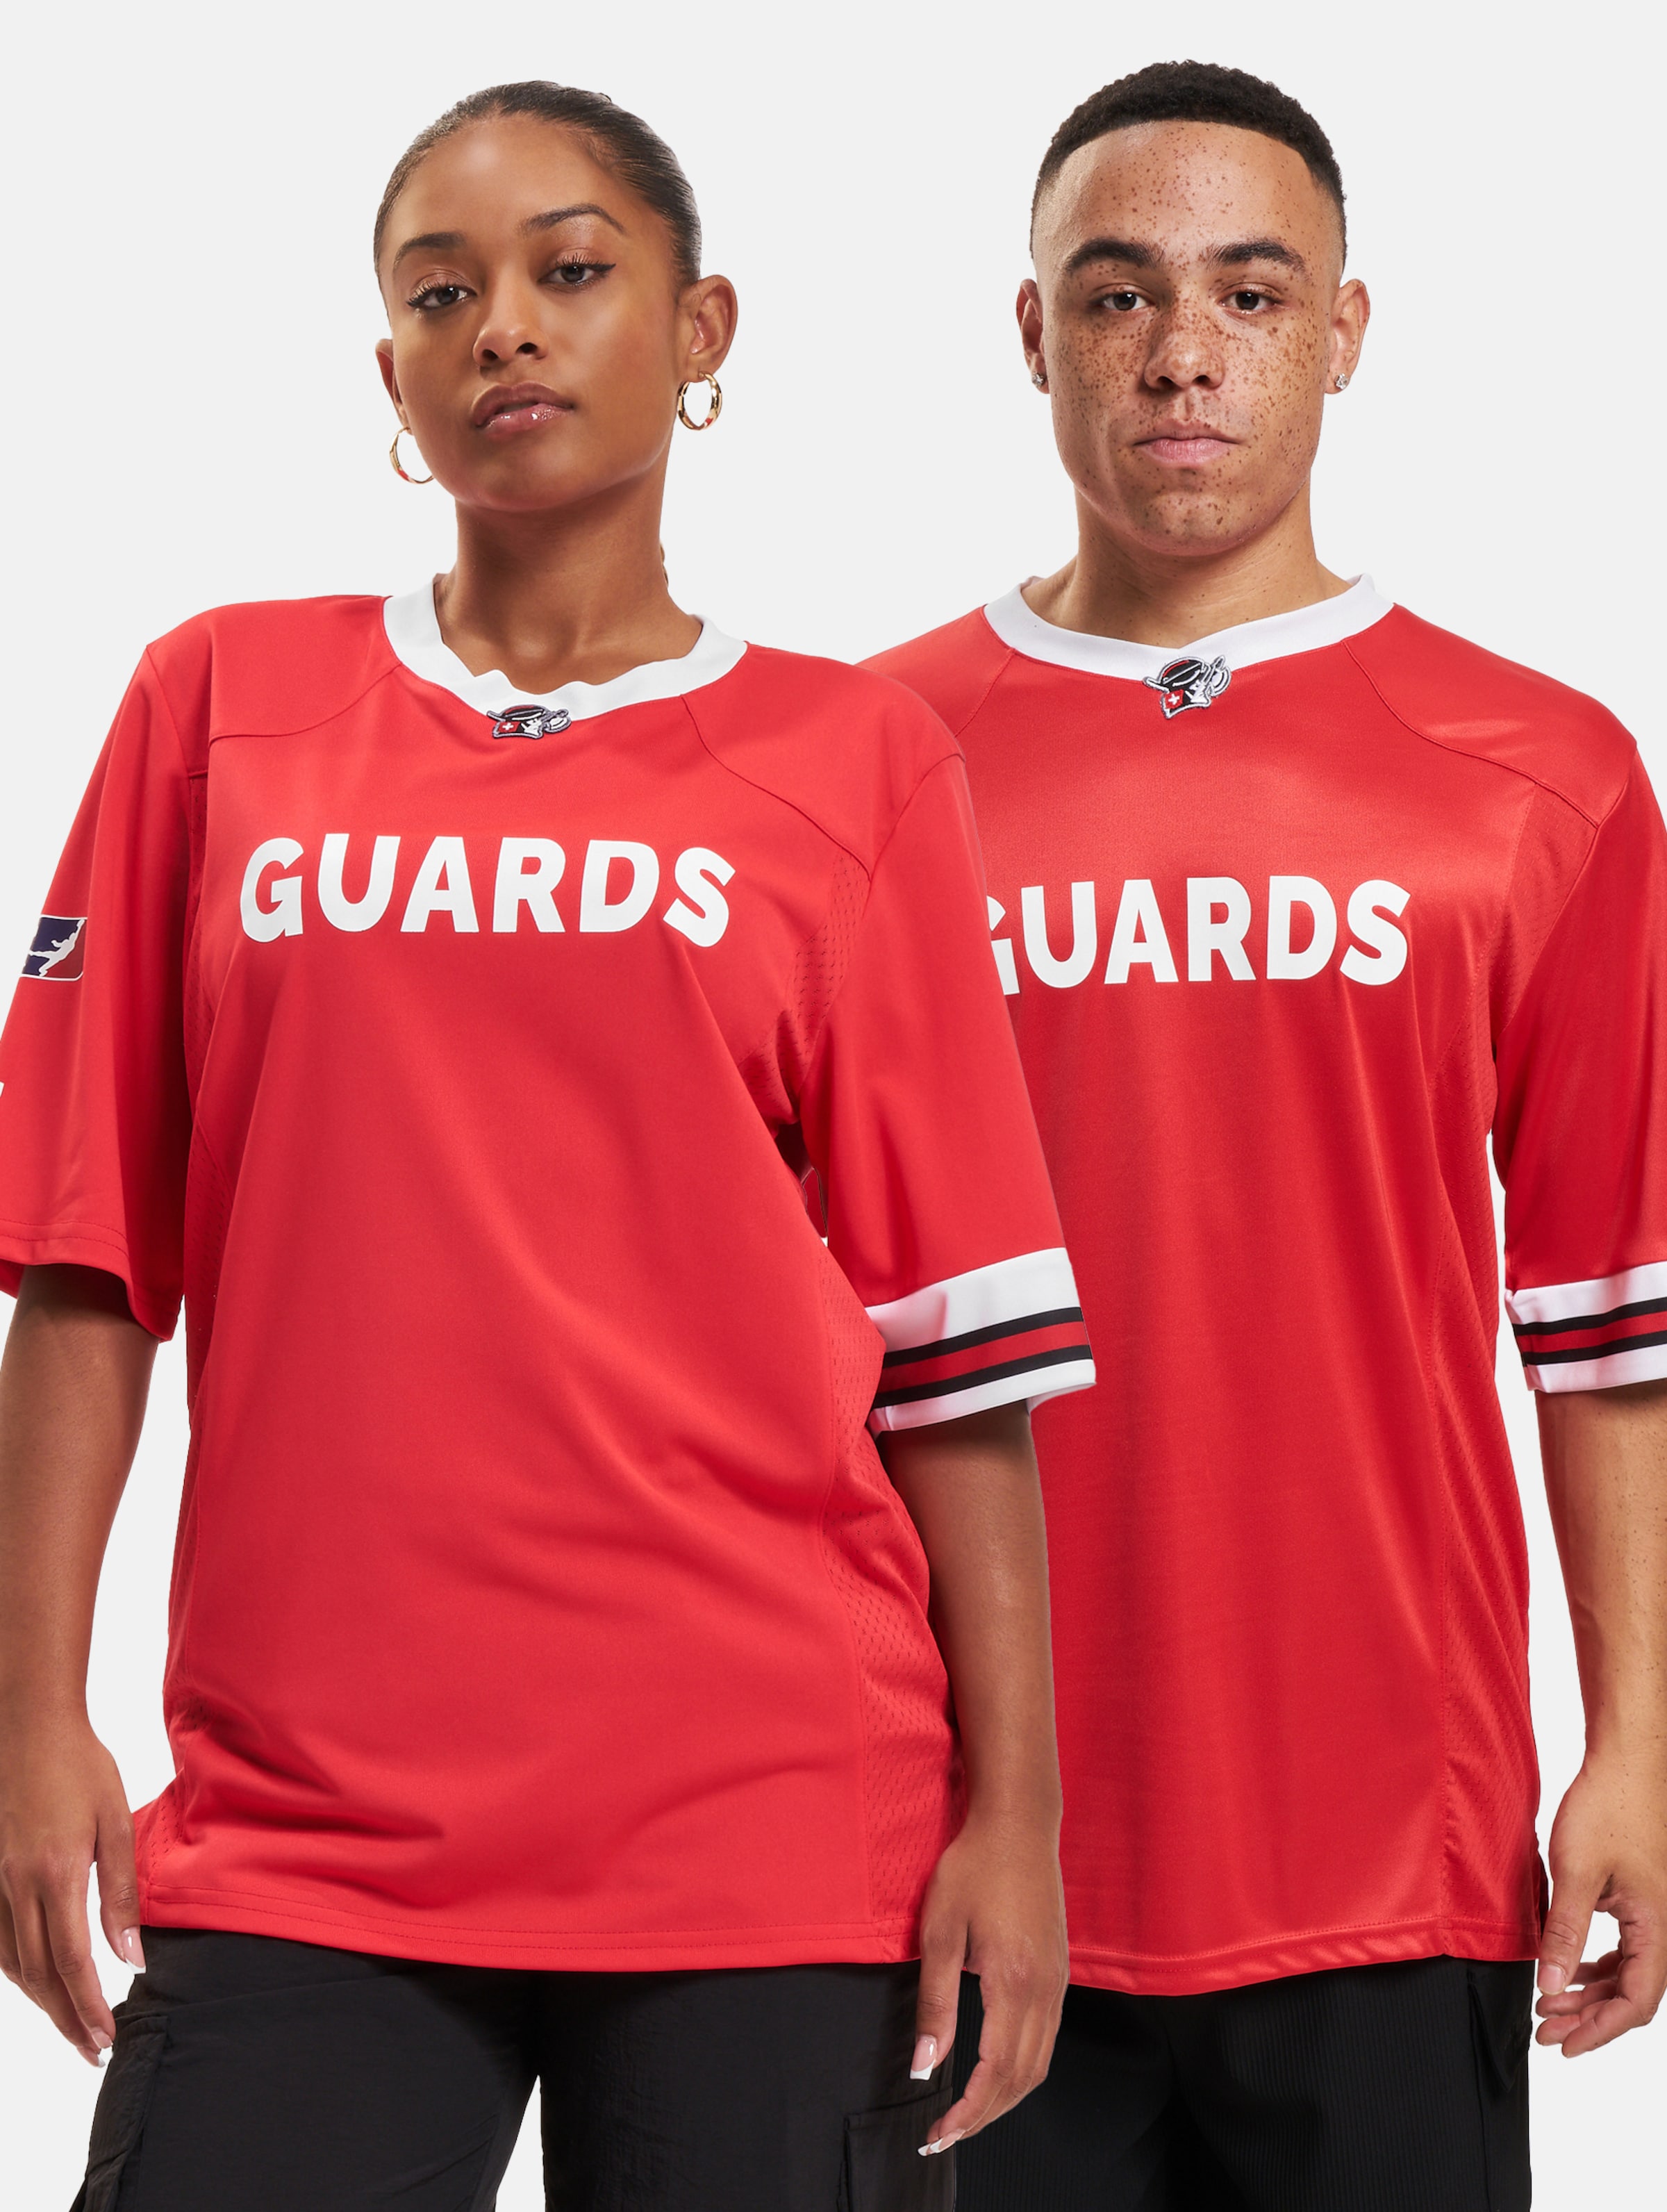 European League Of Football 1018 Helvetic Guards Authentic Game T-Shirt Vrouwen op kleur rood, Maat XXL